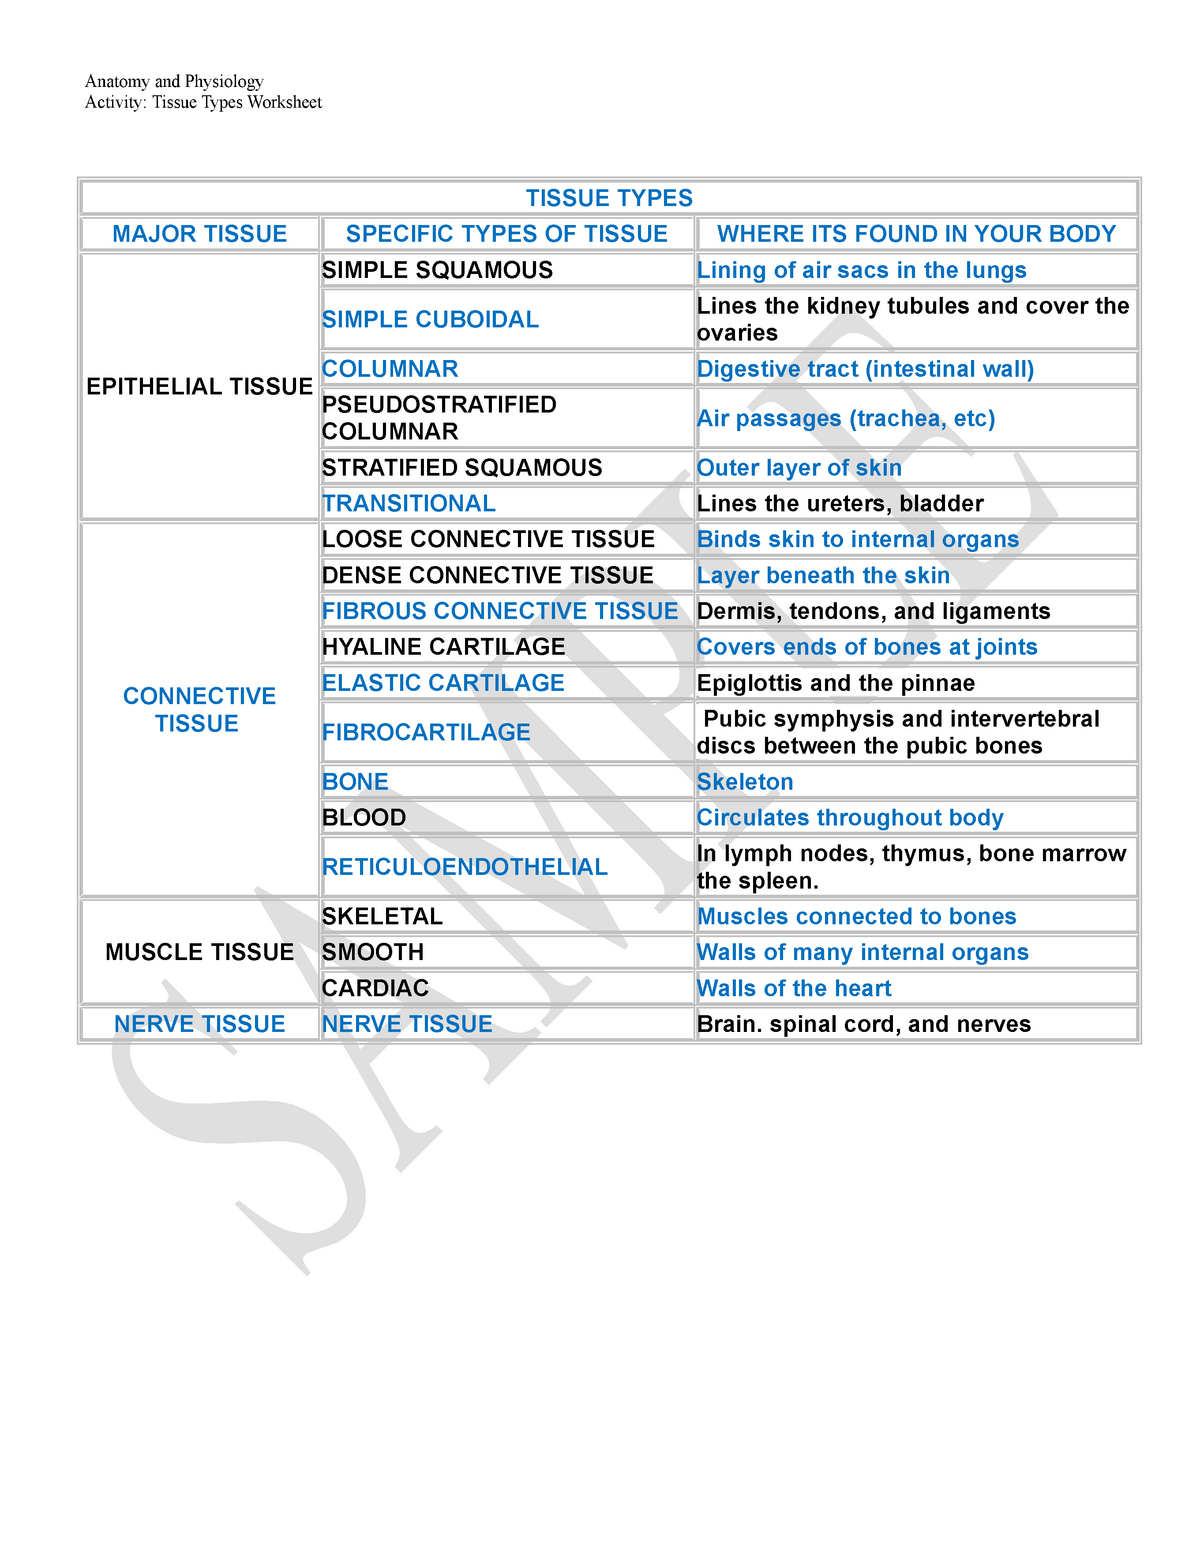 Worksheet - tissues chart - StuDocu Throughout Types Of Tissues Worksheet